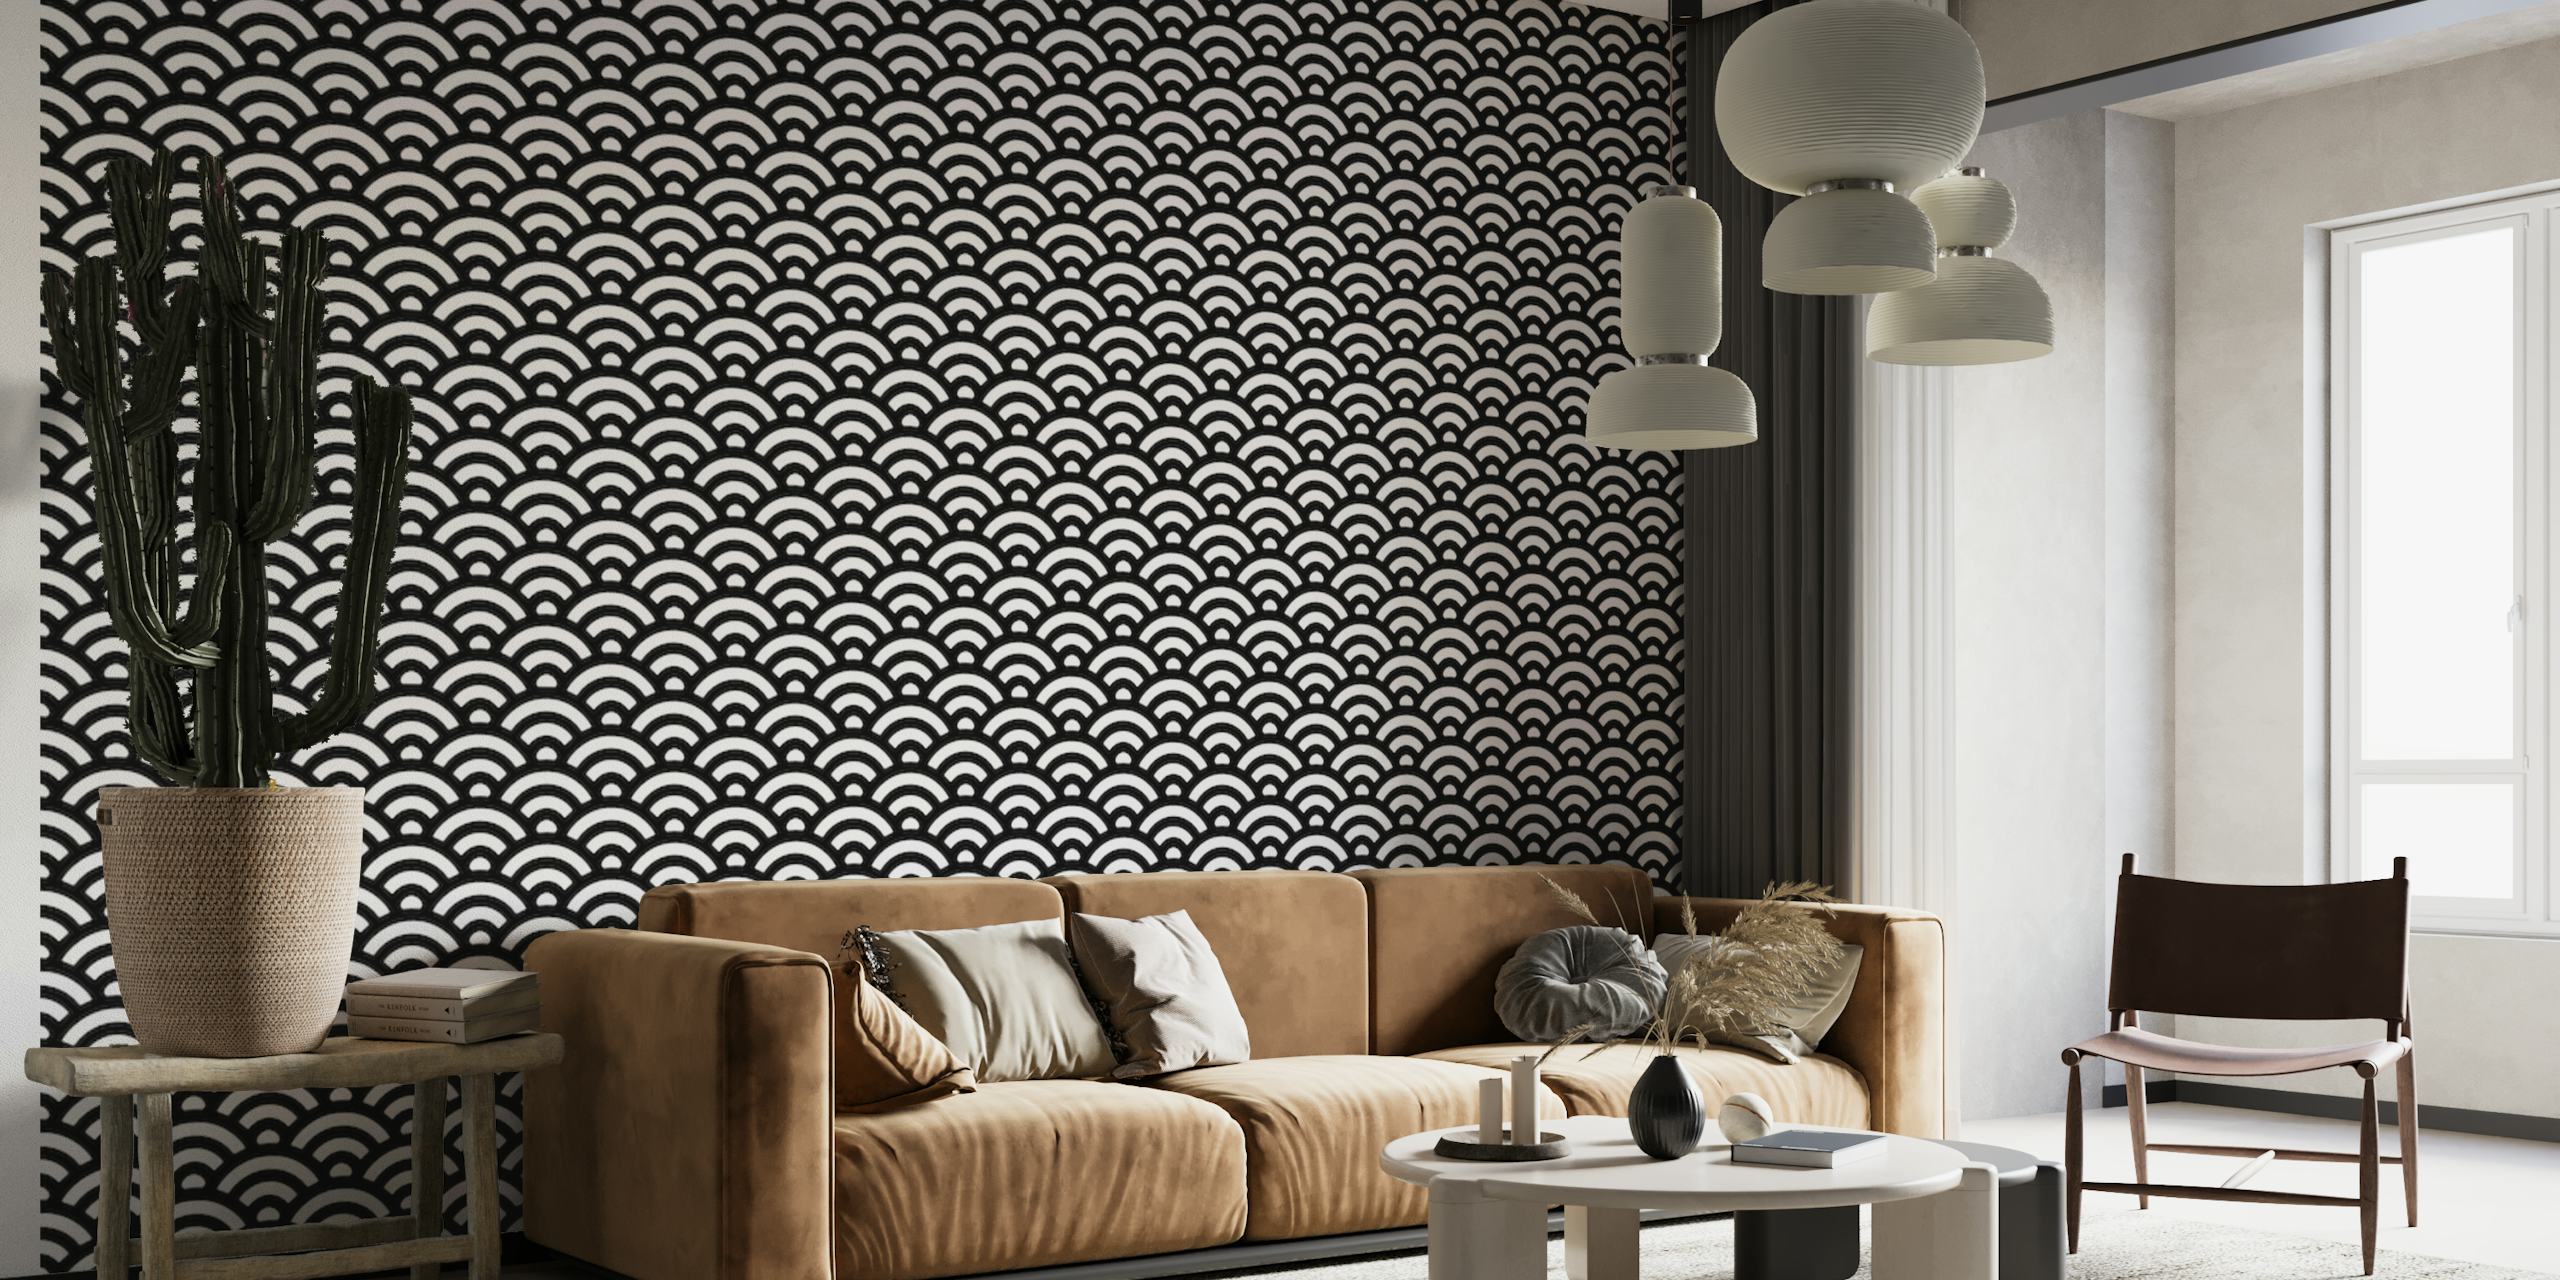 Japanese wave pattern 3 wallpaper